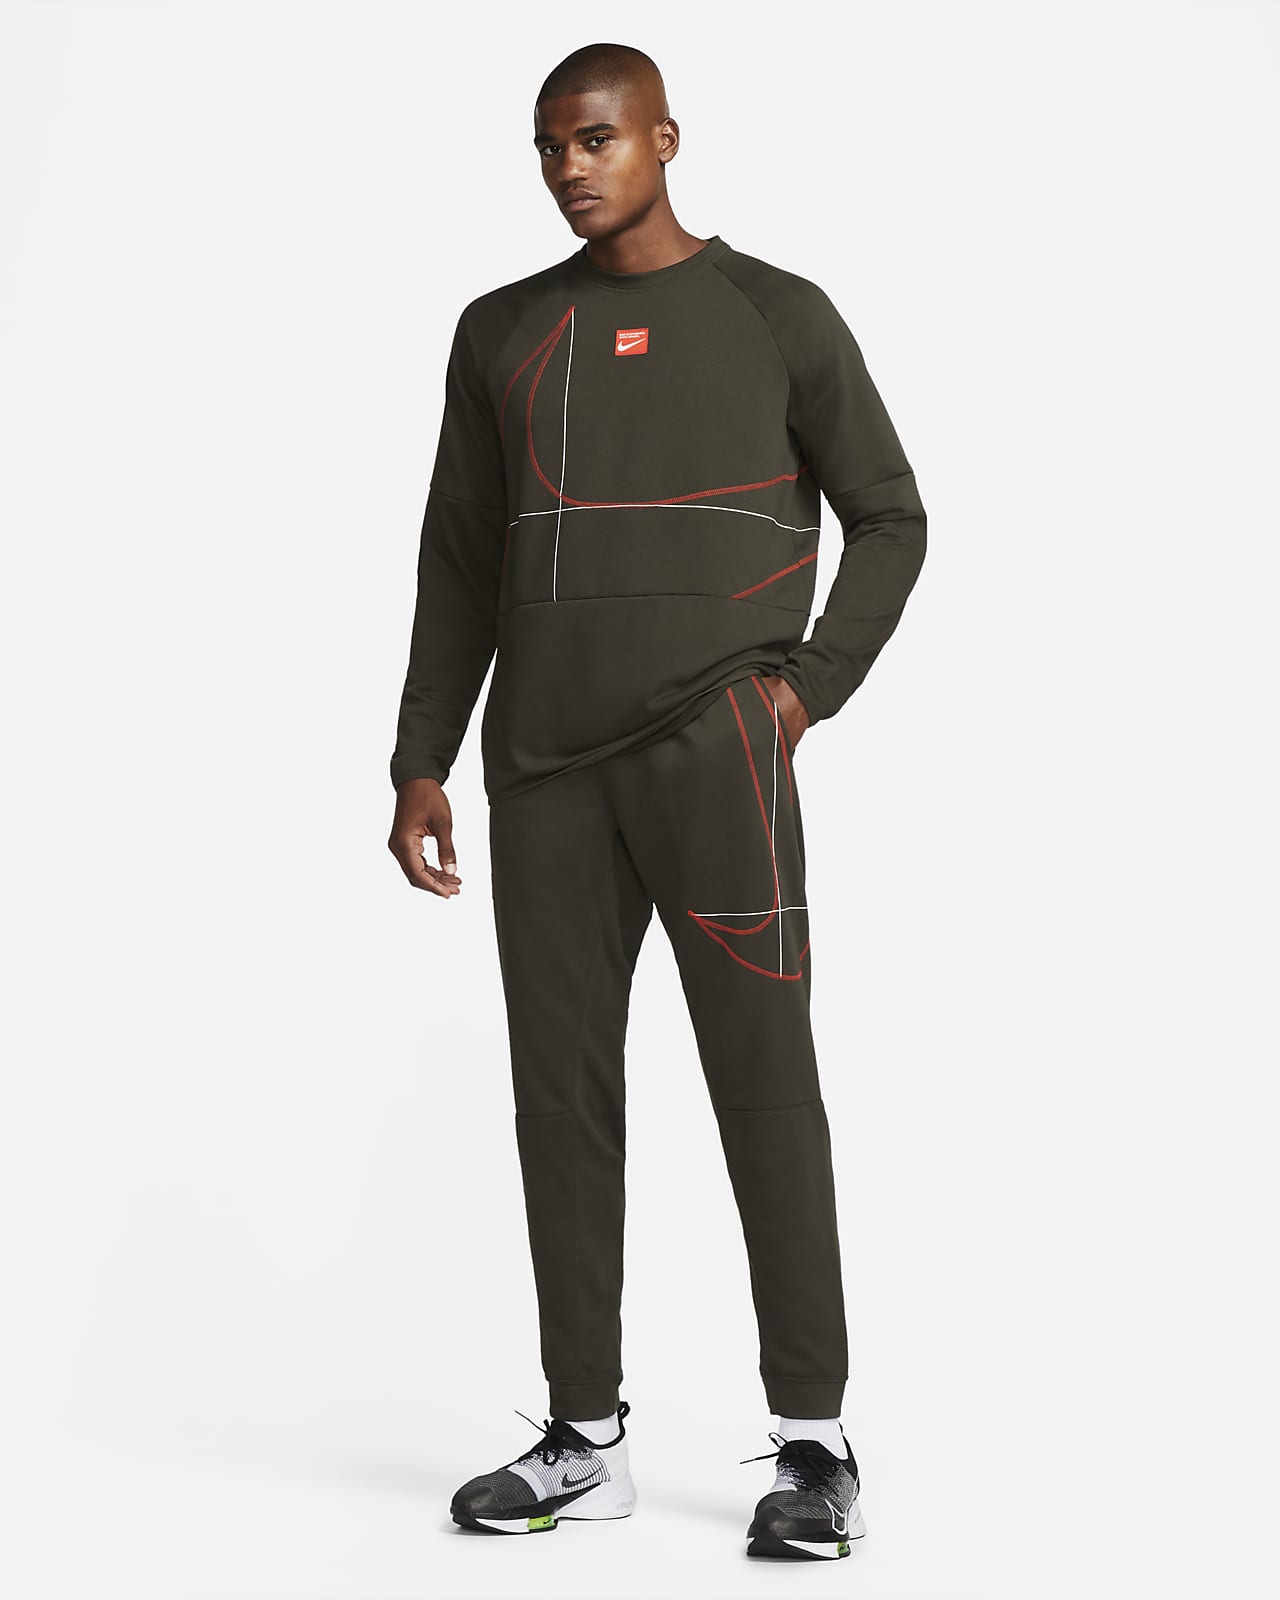 Nike Track Pants Mens L Jet Black Sweatpants White Swoosh Baggy Fit Mesh  Lined | eBay